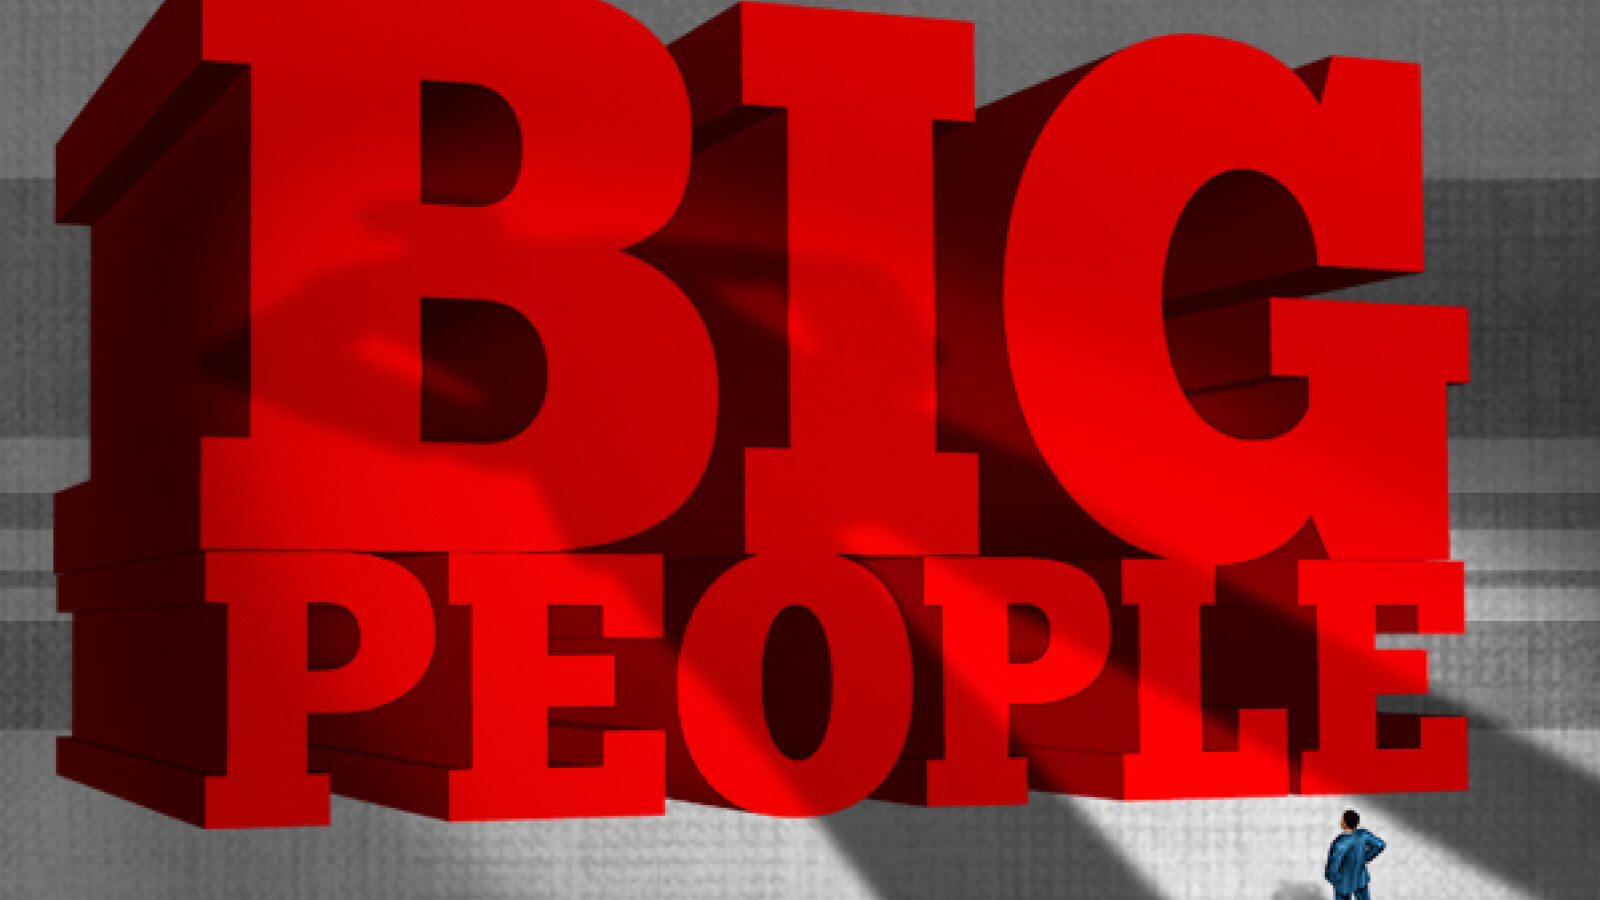 Big People